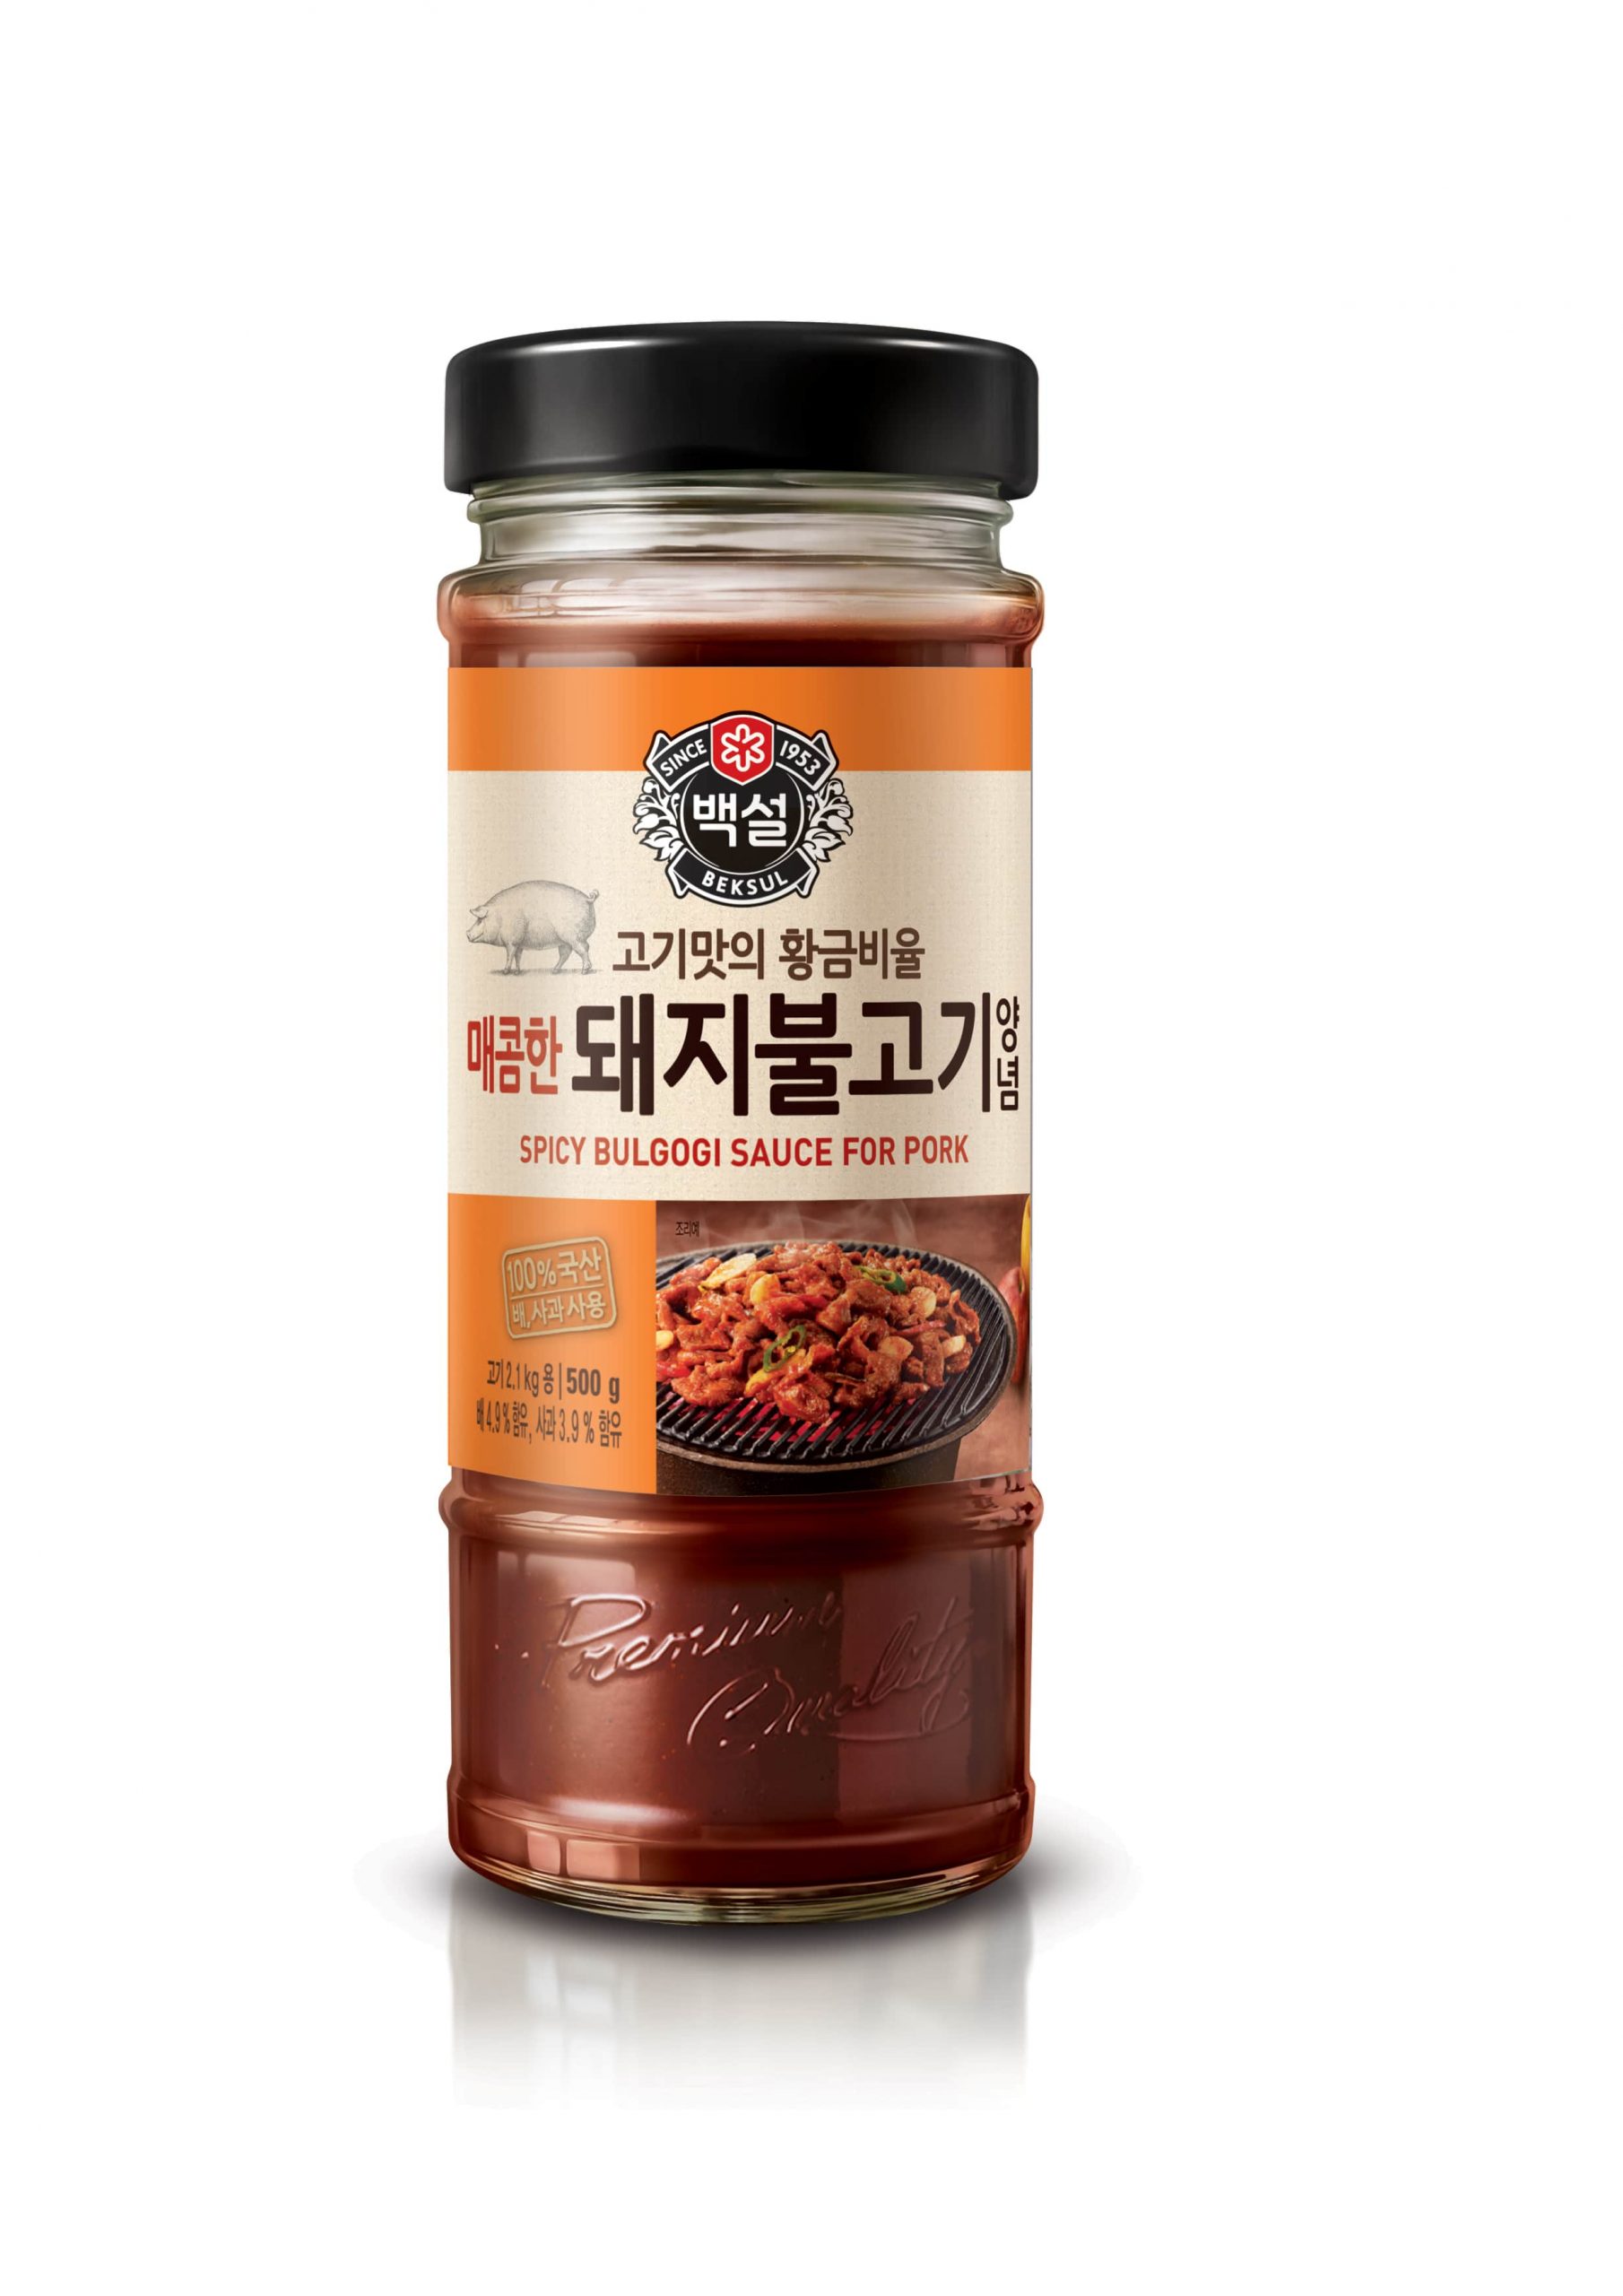 Korean BBQ Sauce HotSpicy Bulgogi Suace for Pork G min